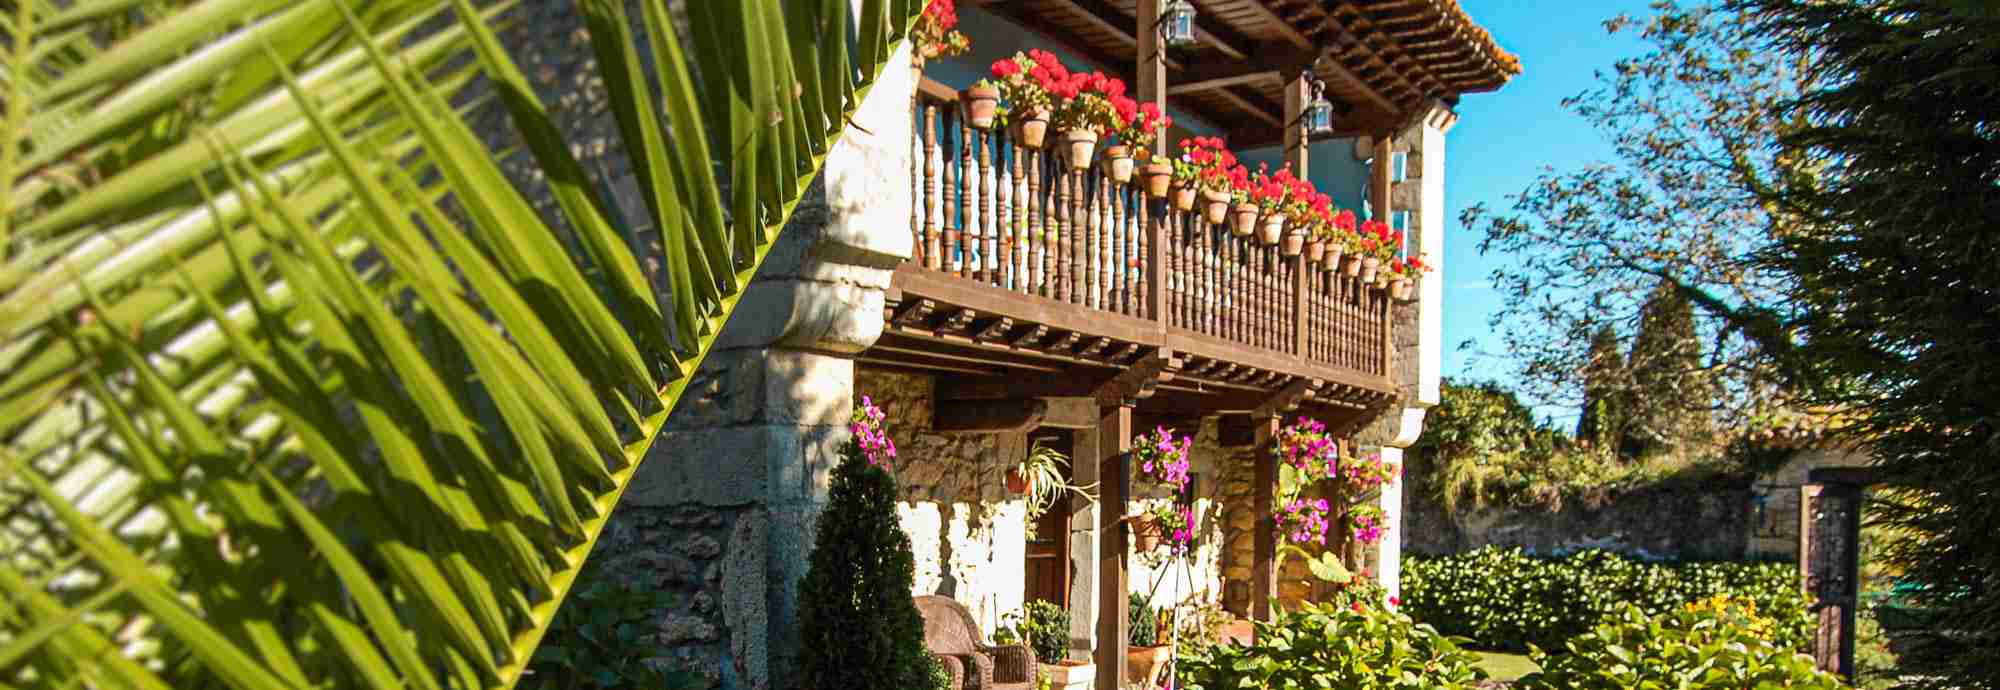 Asturias villa 7 mins away from stunning beaches and walks from doorstep